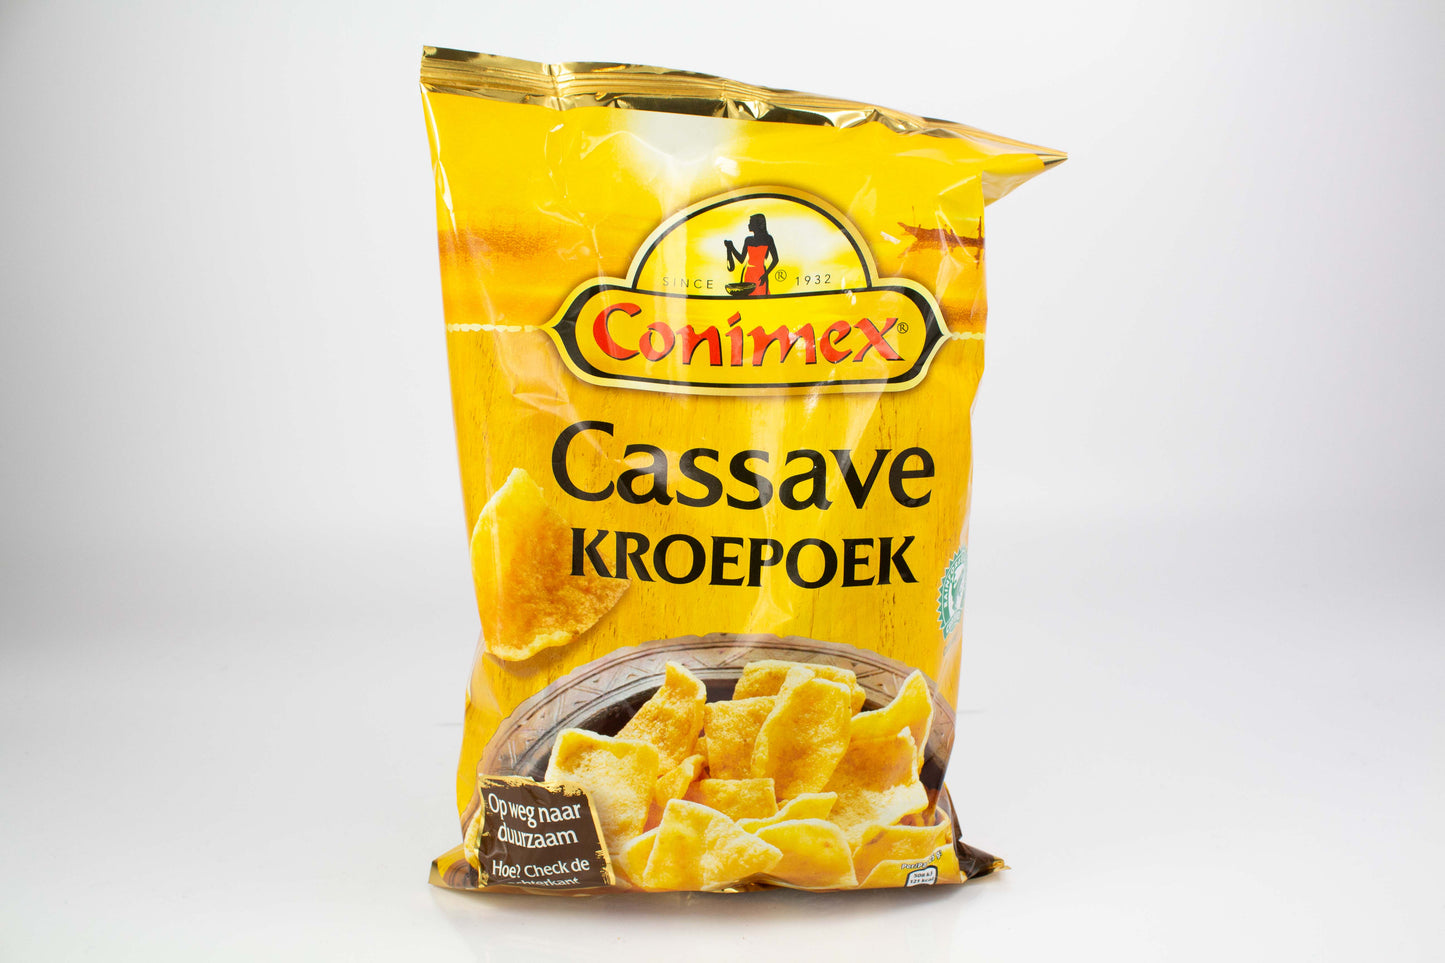 Conimex Kroepoek Cassave